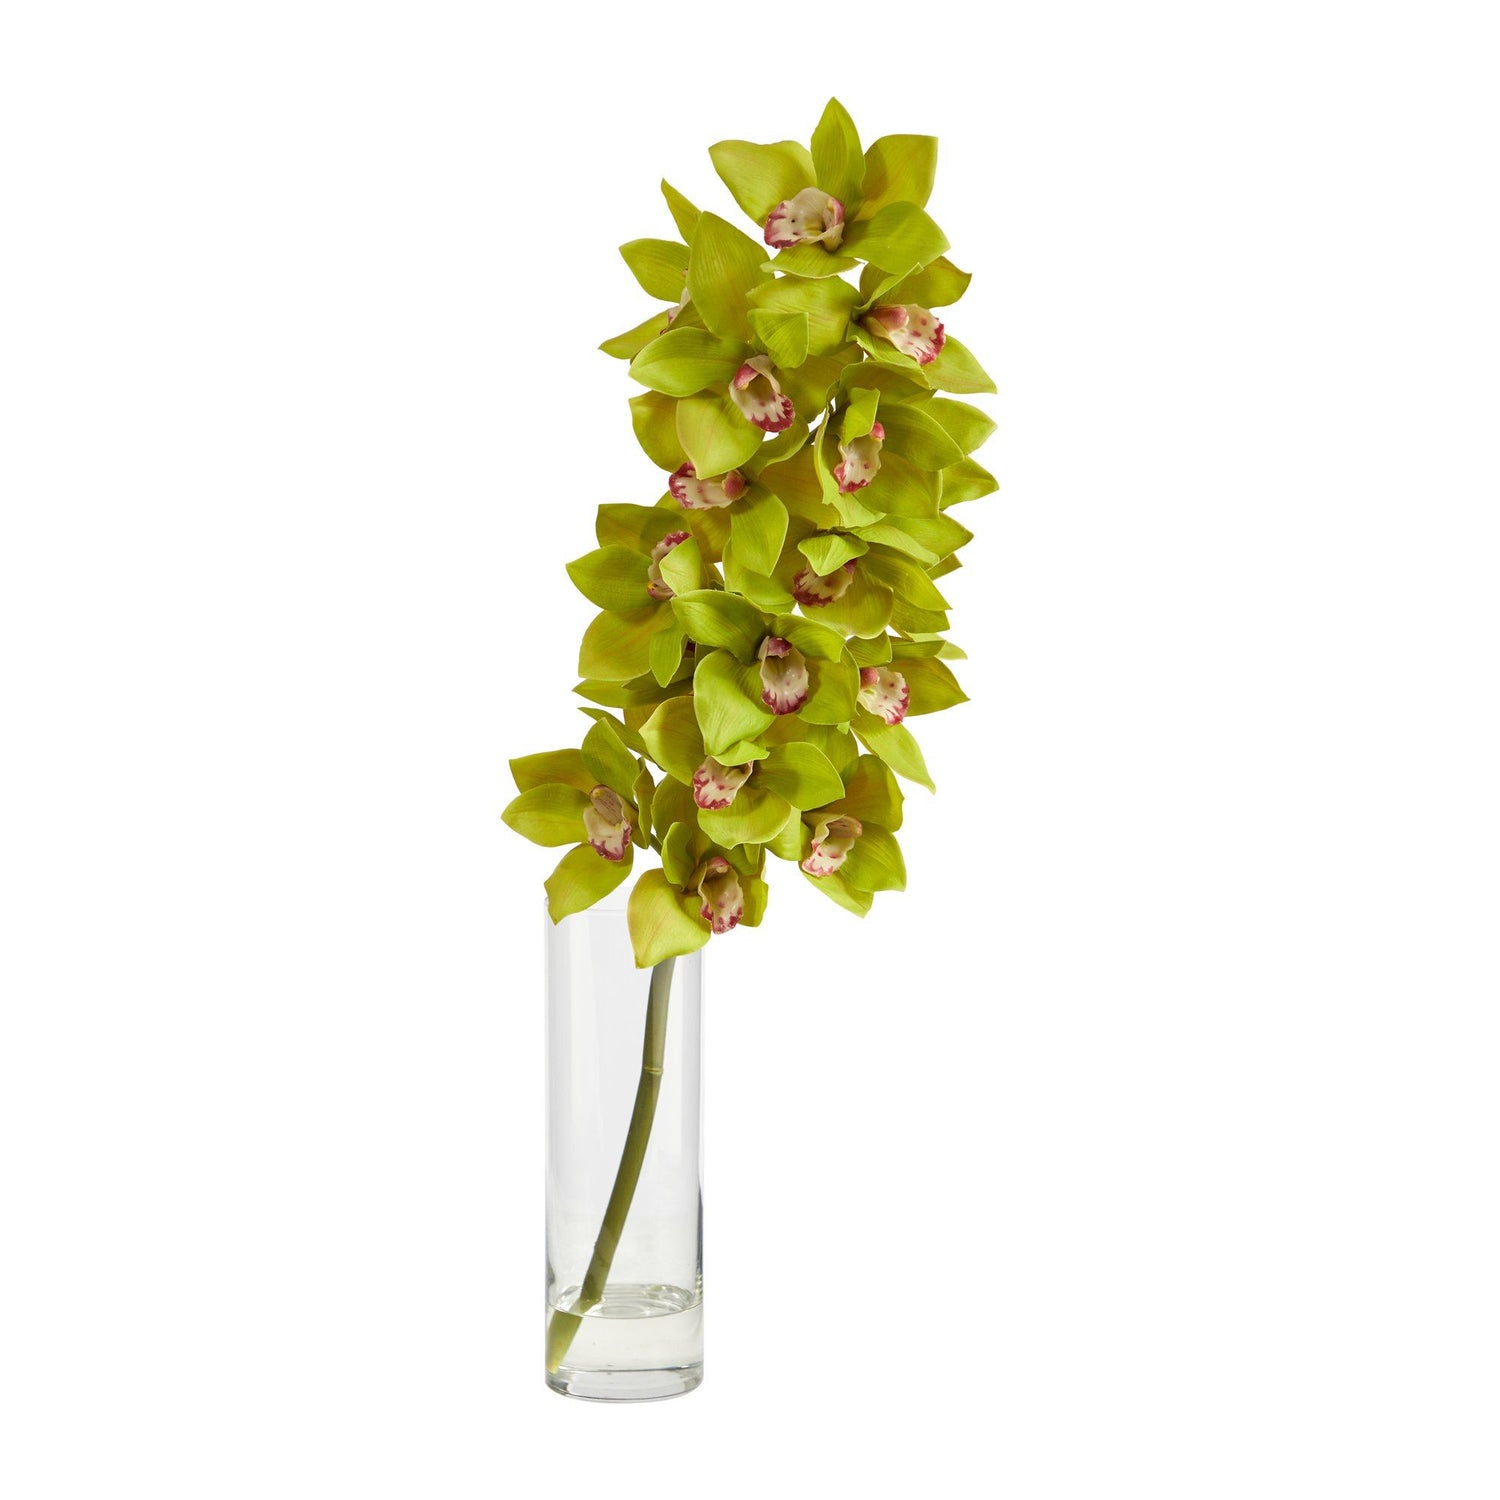 28” Cymbidium Orchid Artificial Arrangement in Glass Vase